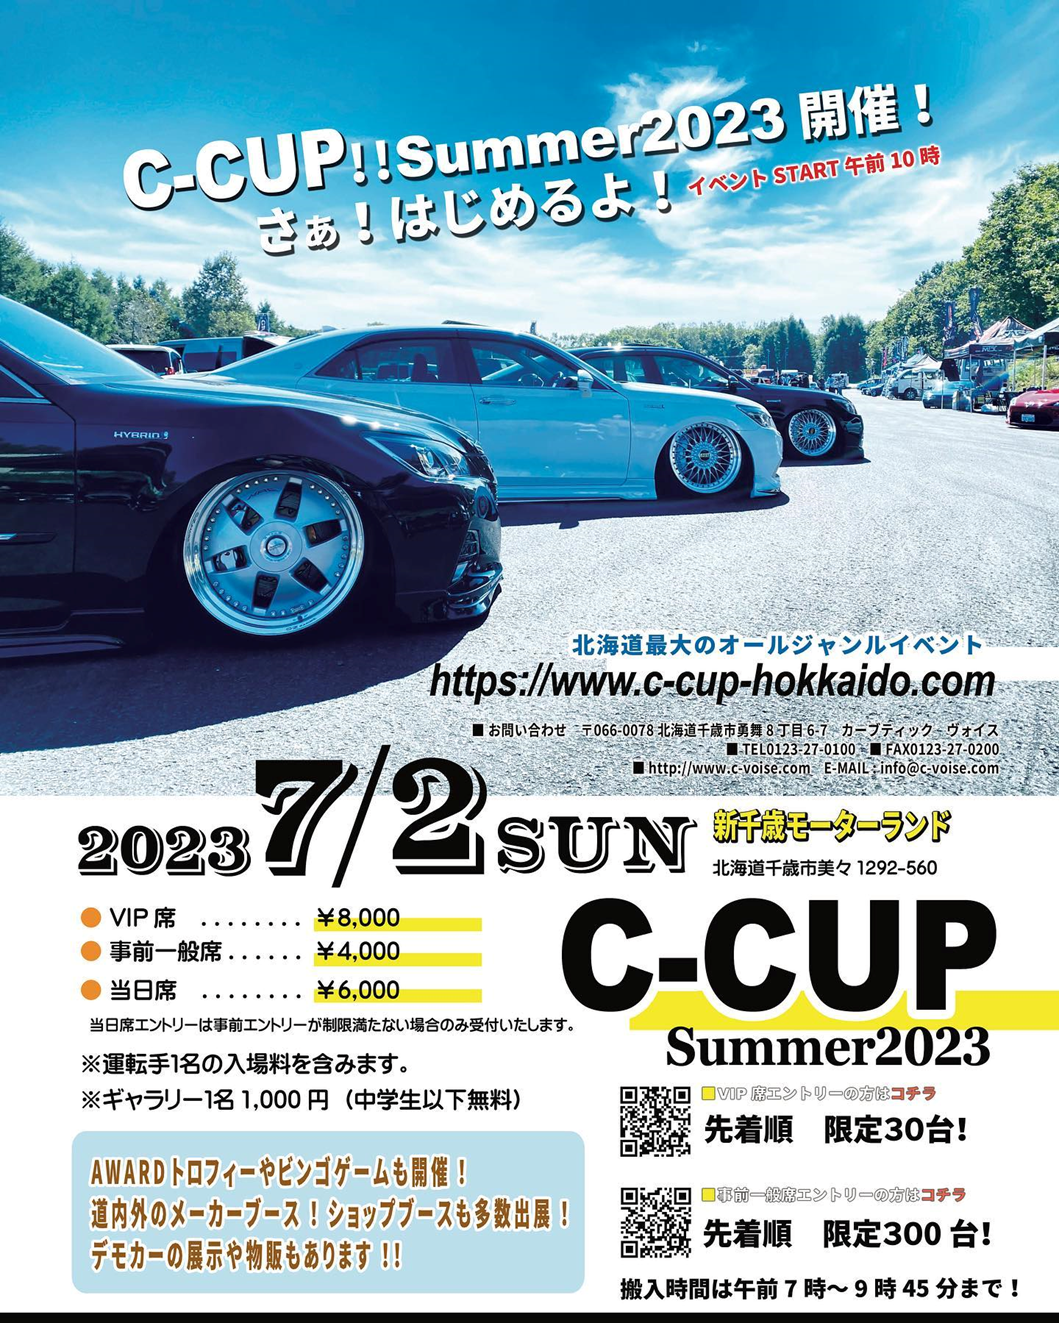 [Chitose City, Hokkaido] C-CUP Summer 2023